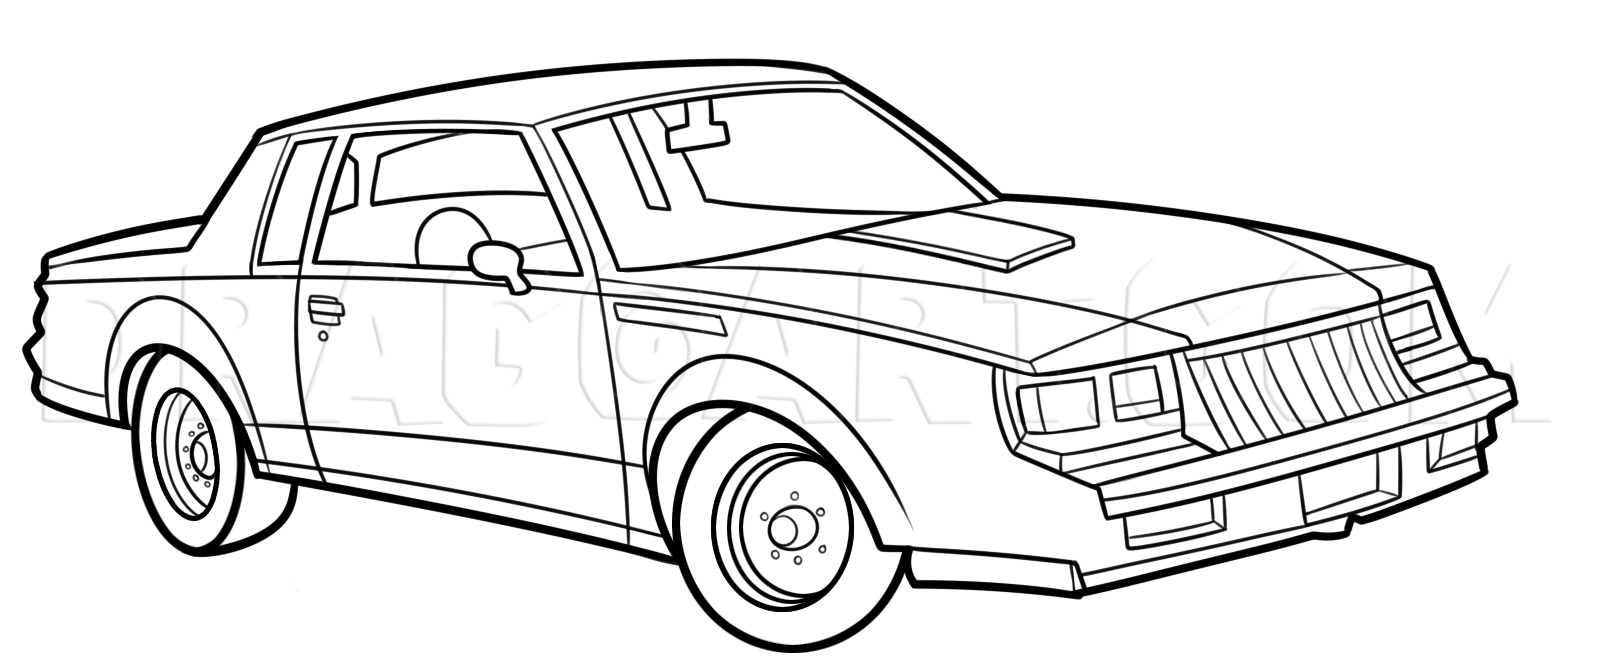 Buick Grand National Drawing Image